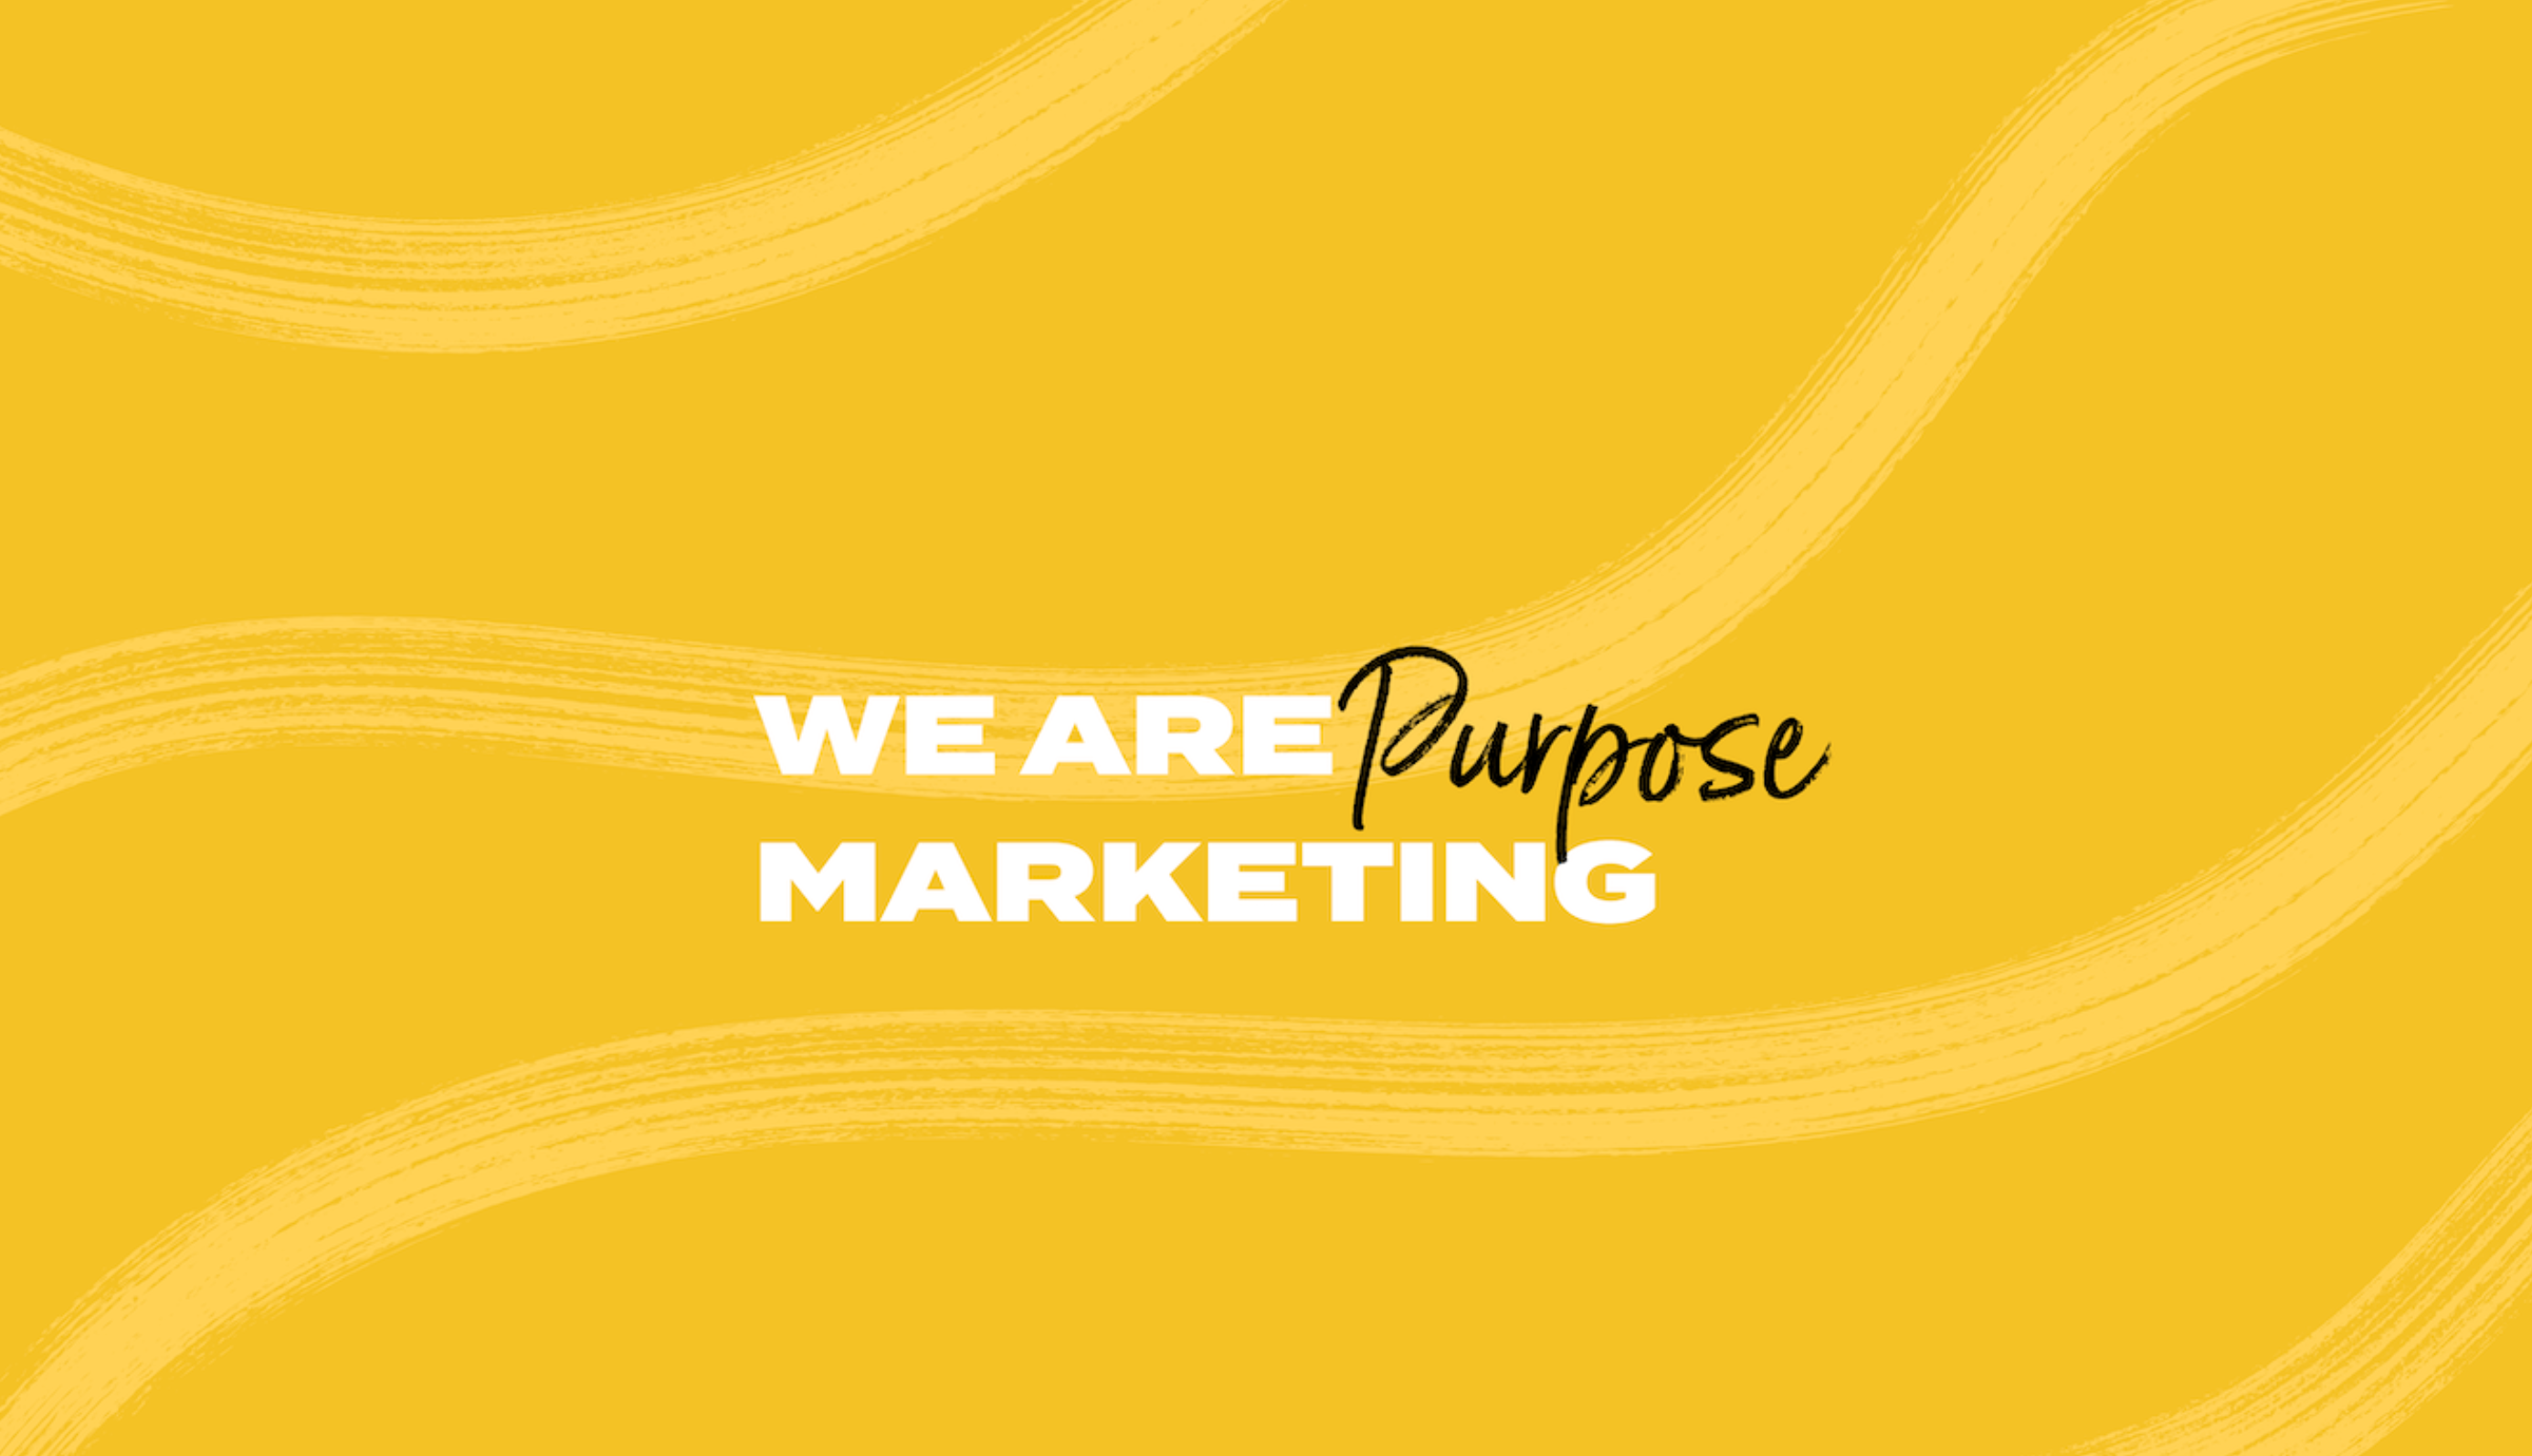 Purpose Marketing